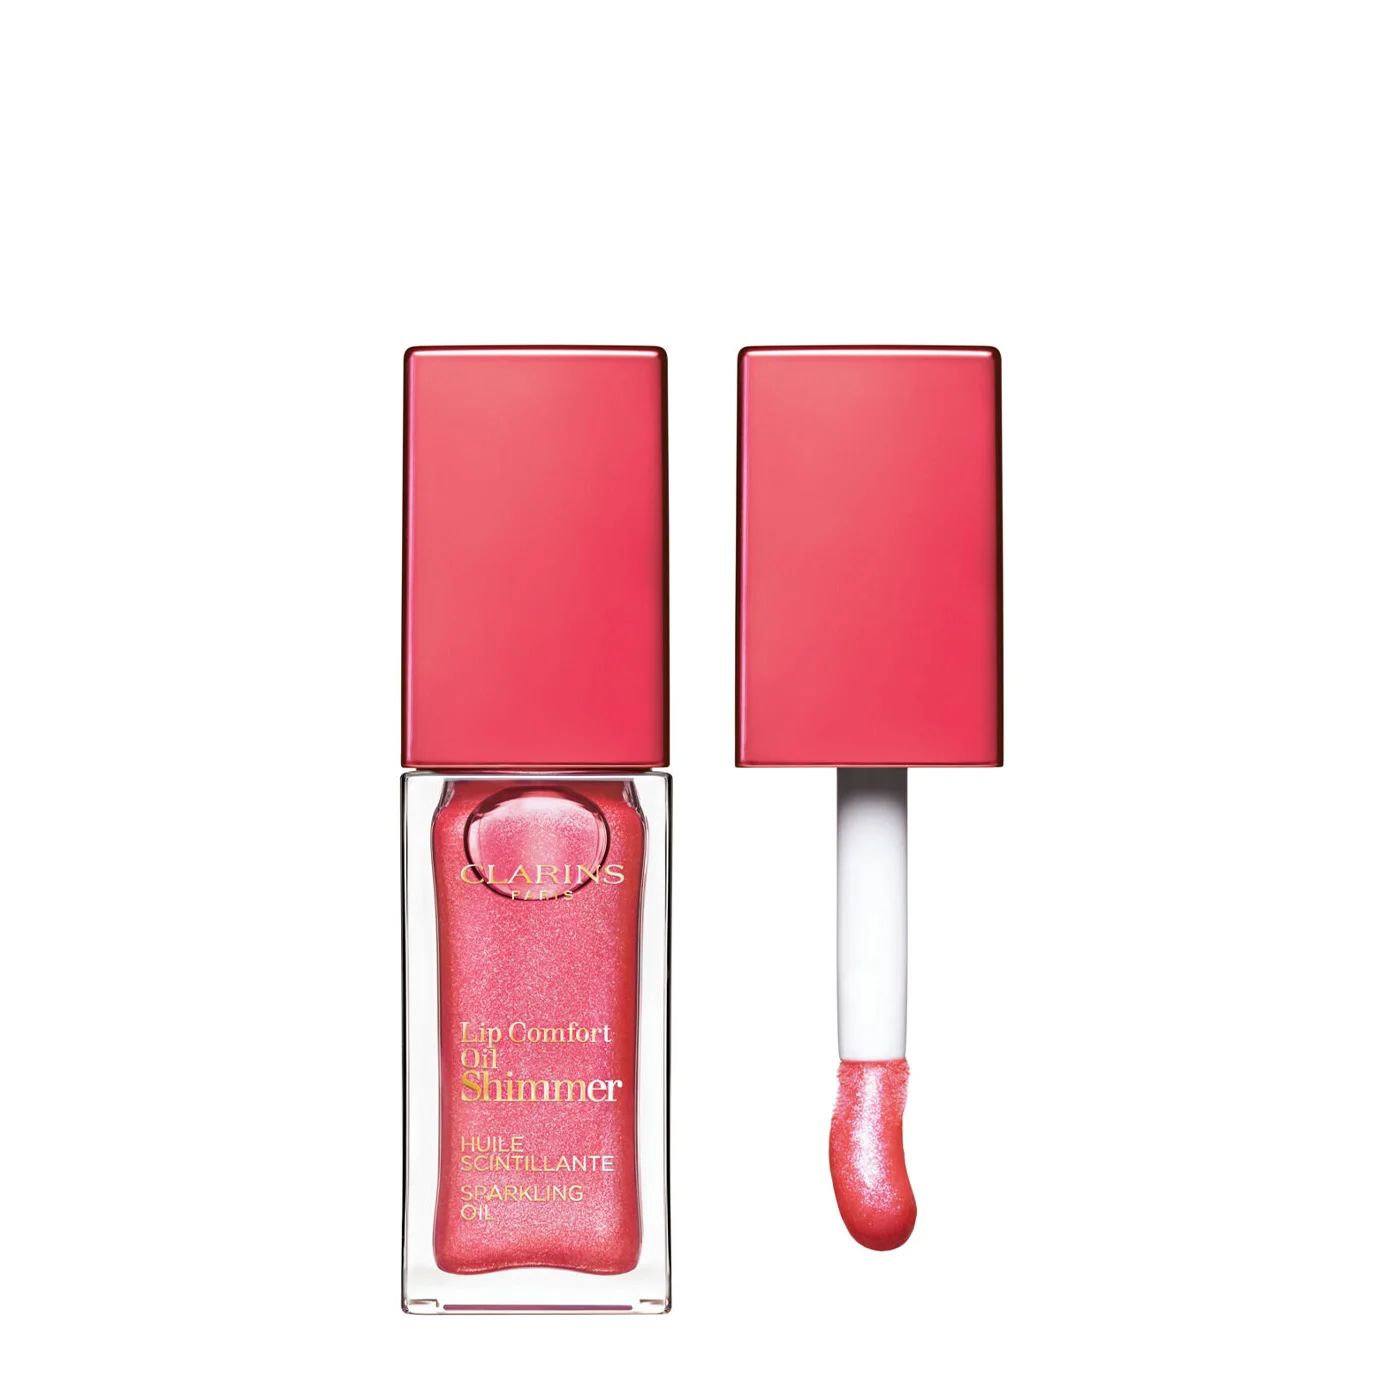 Lip Comfort Oil Shimmer | Clarins US Dynamic